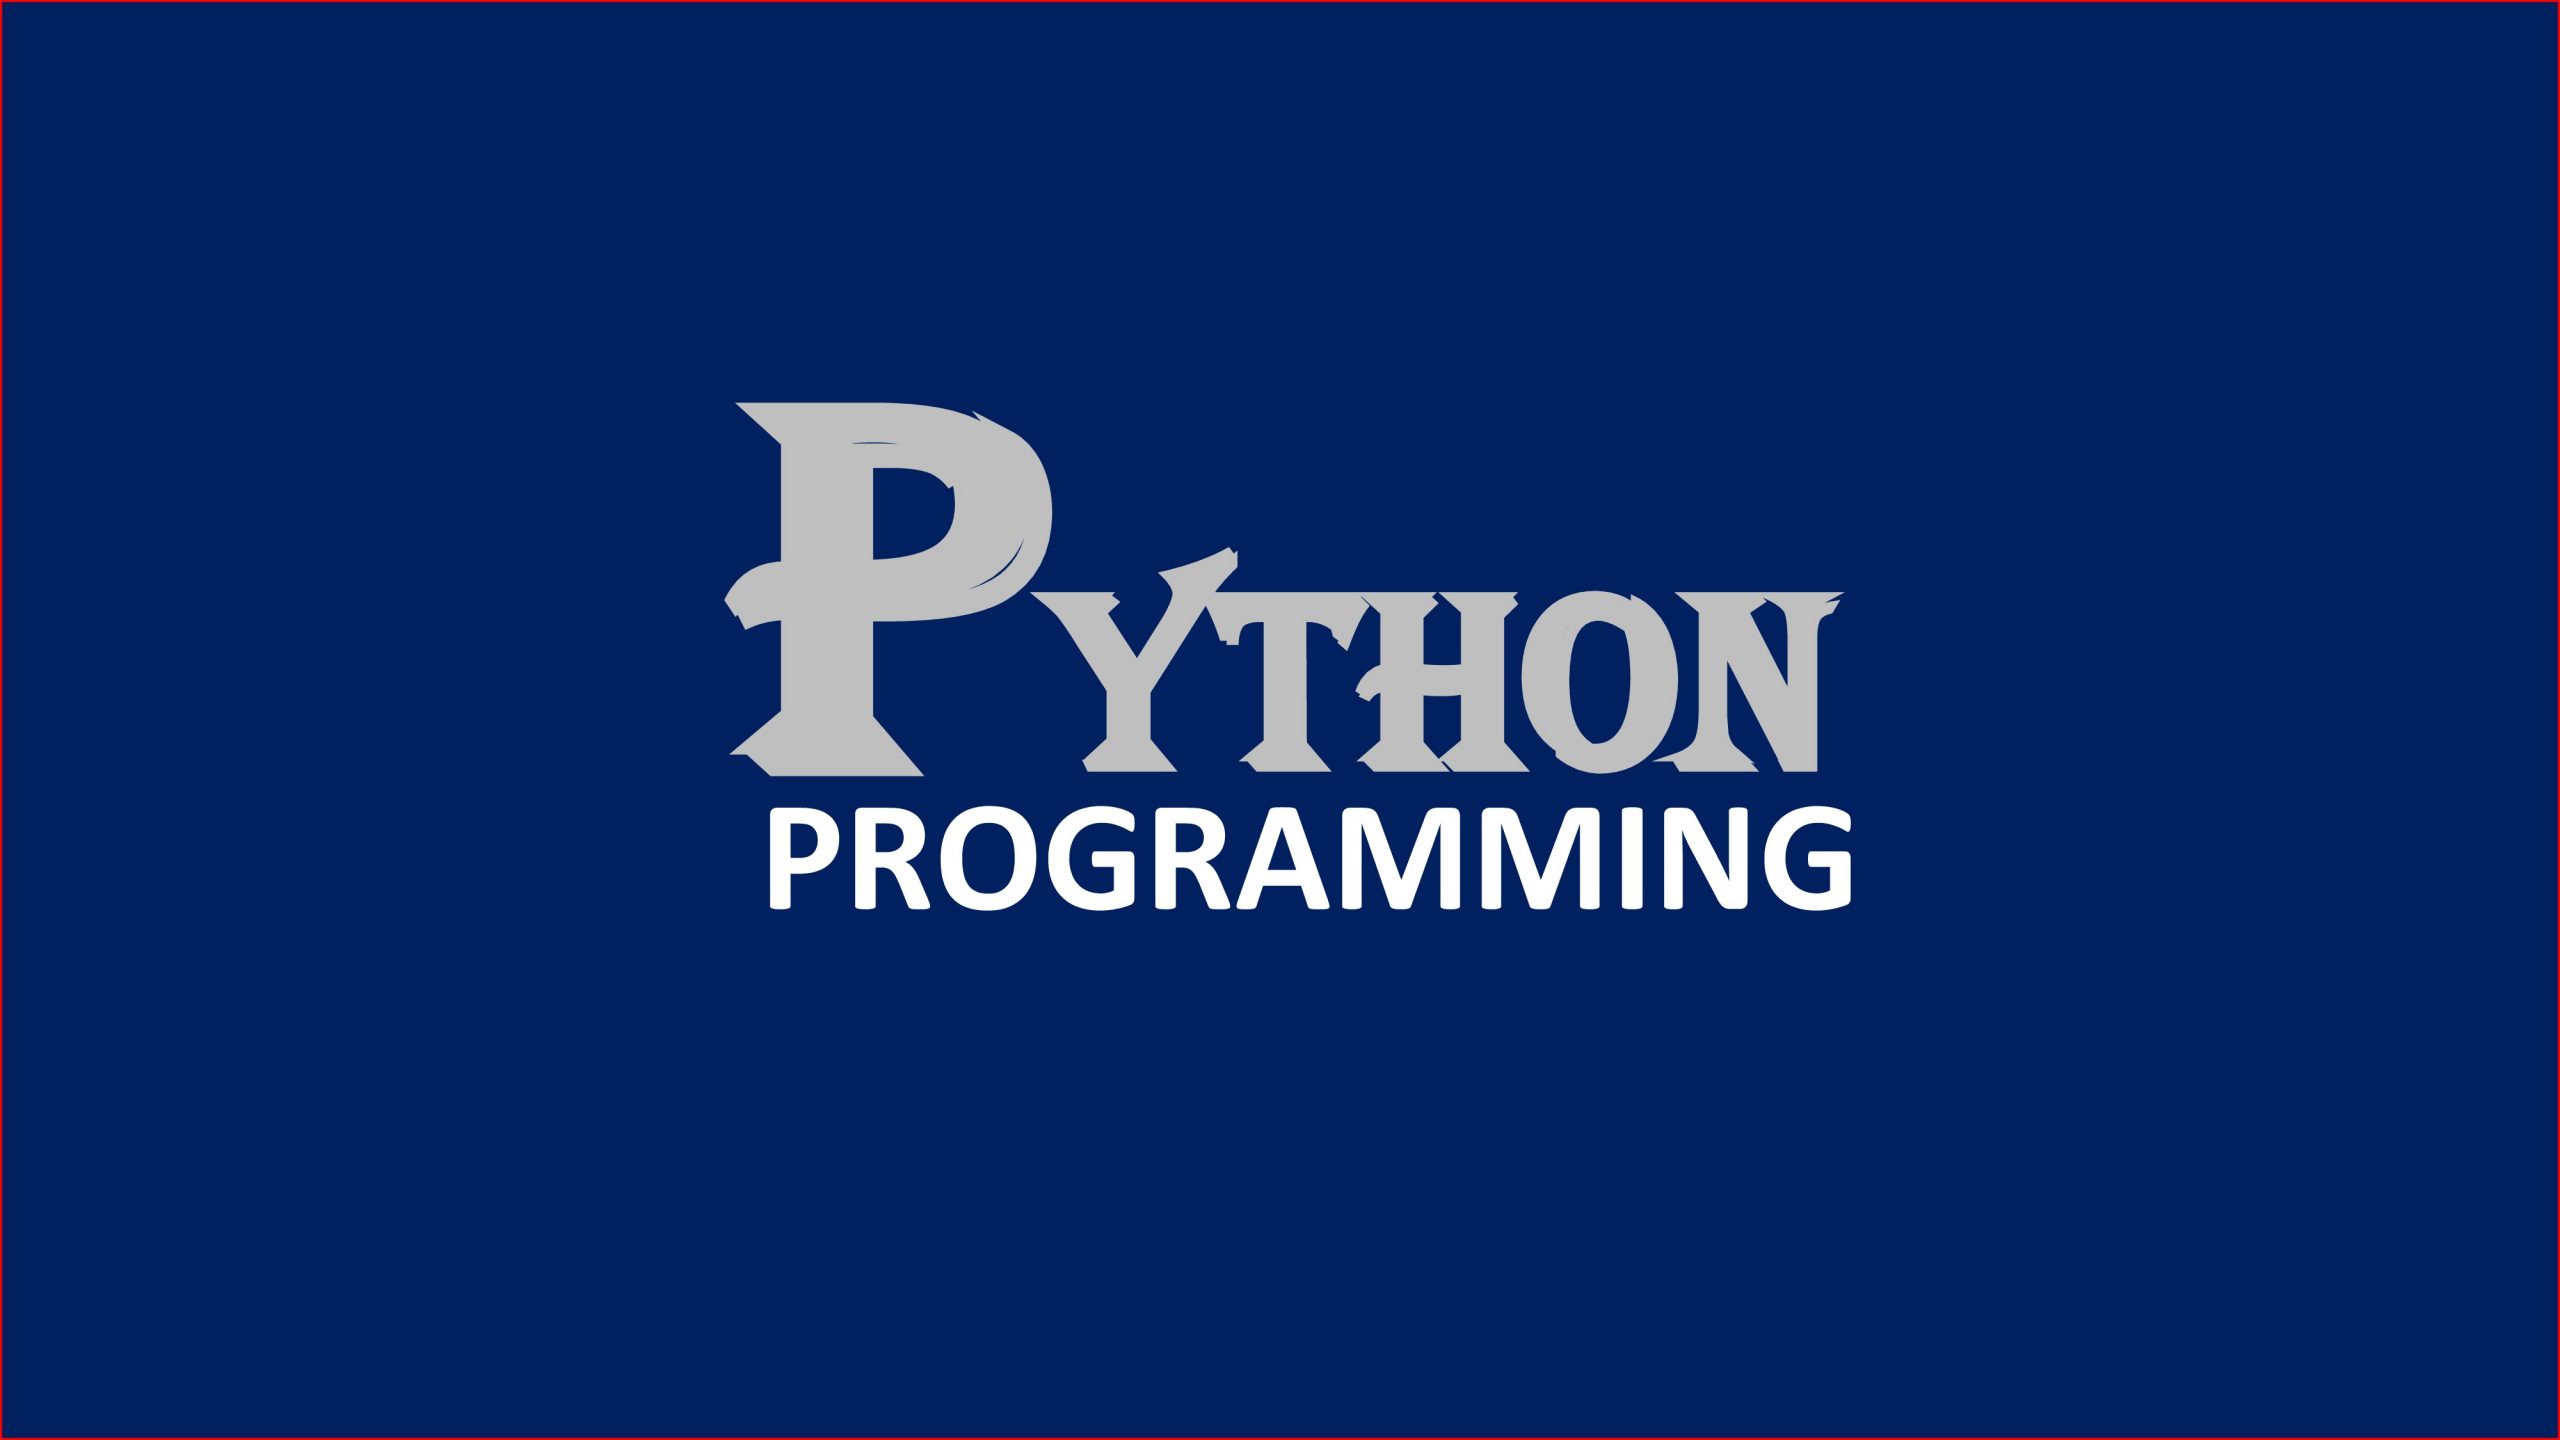 Python Programming Quiz